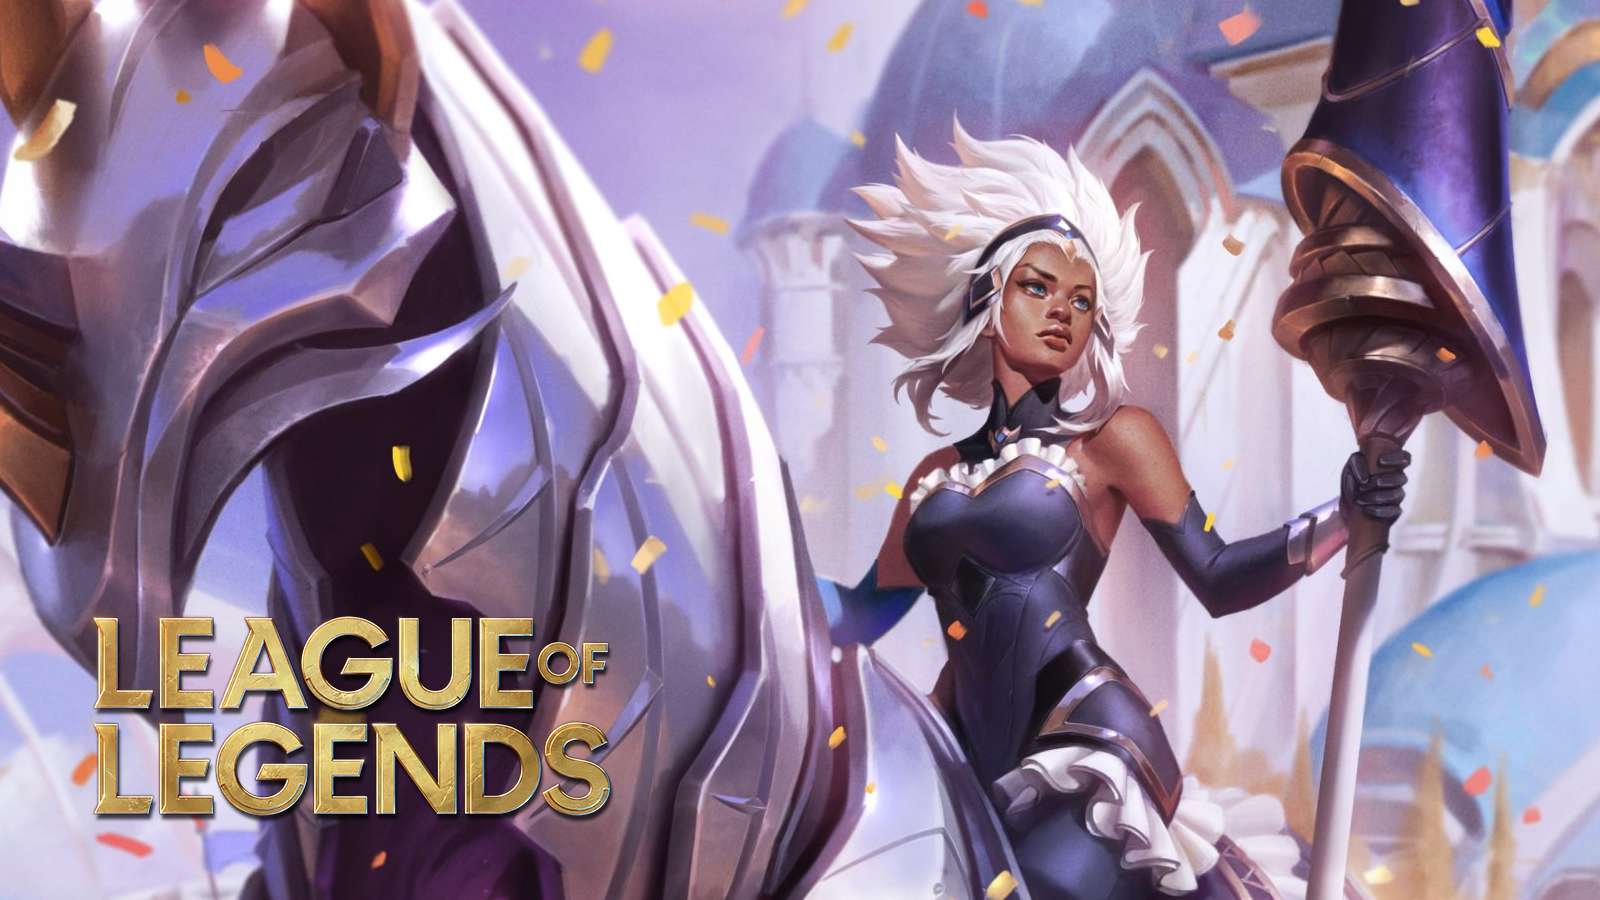 Battle Queen Rell in League of Legends